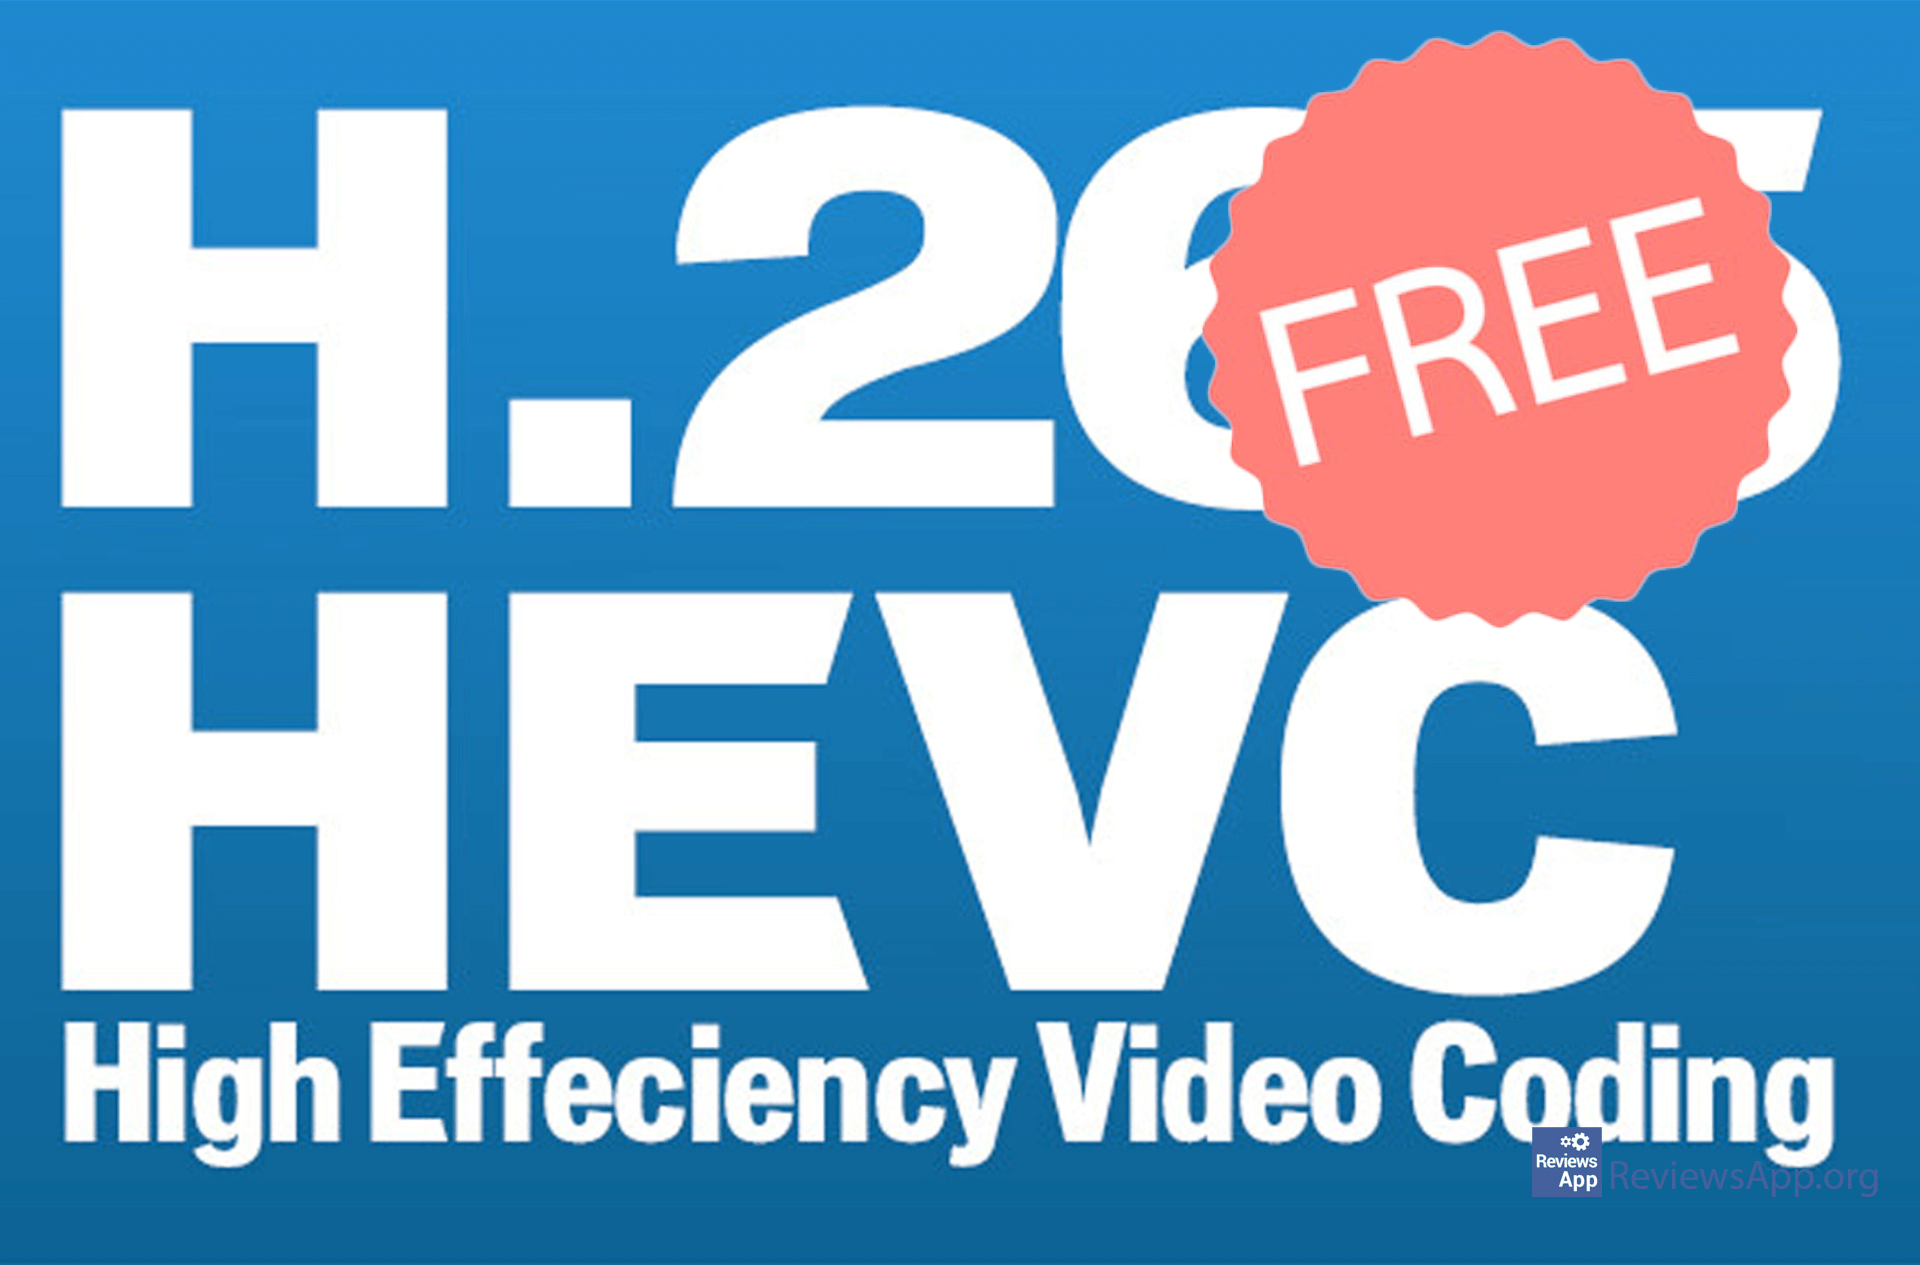 hevc codec download windows 10 free